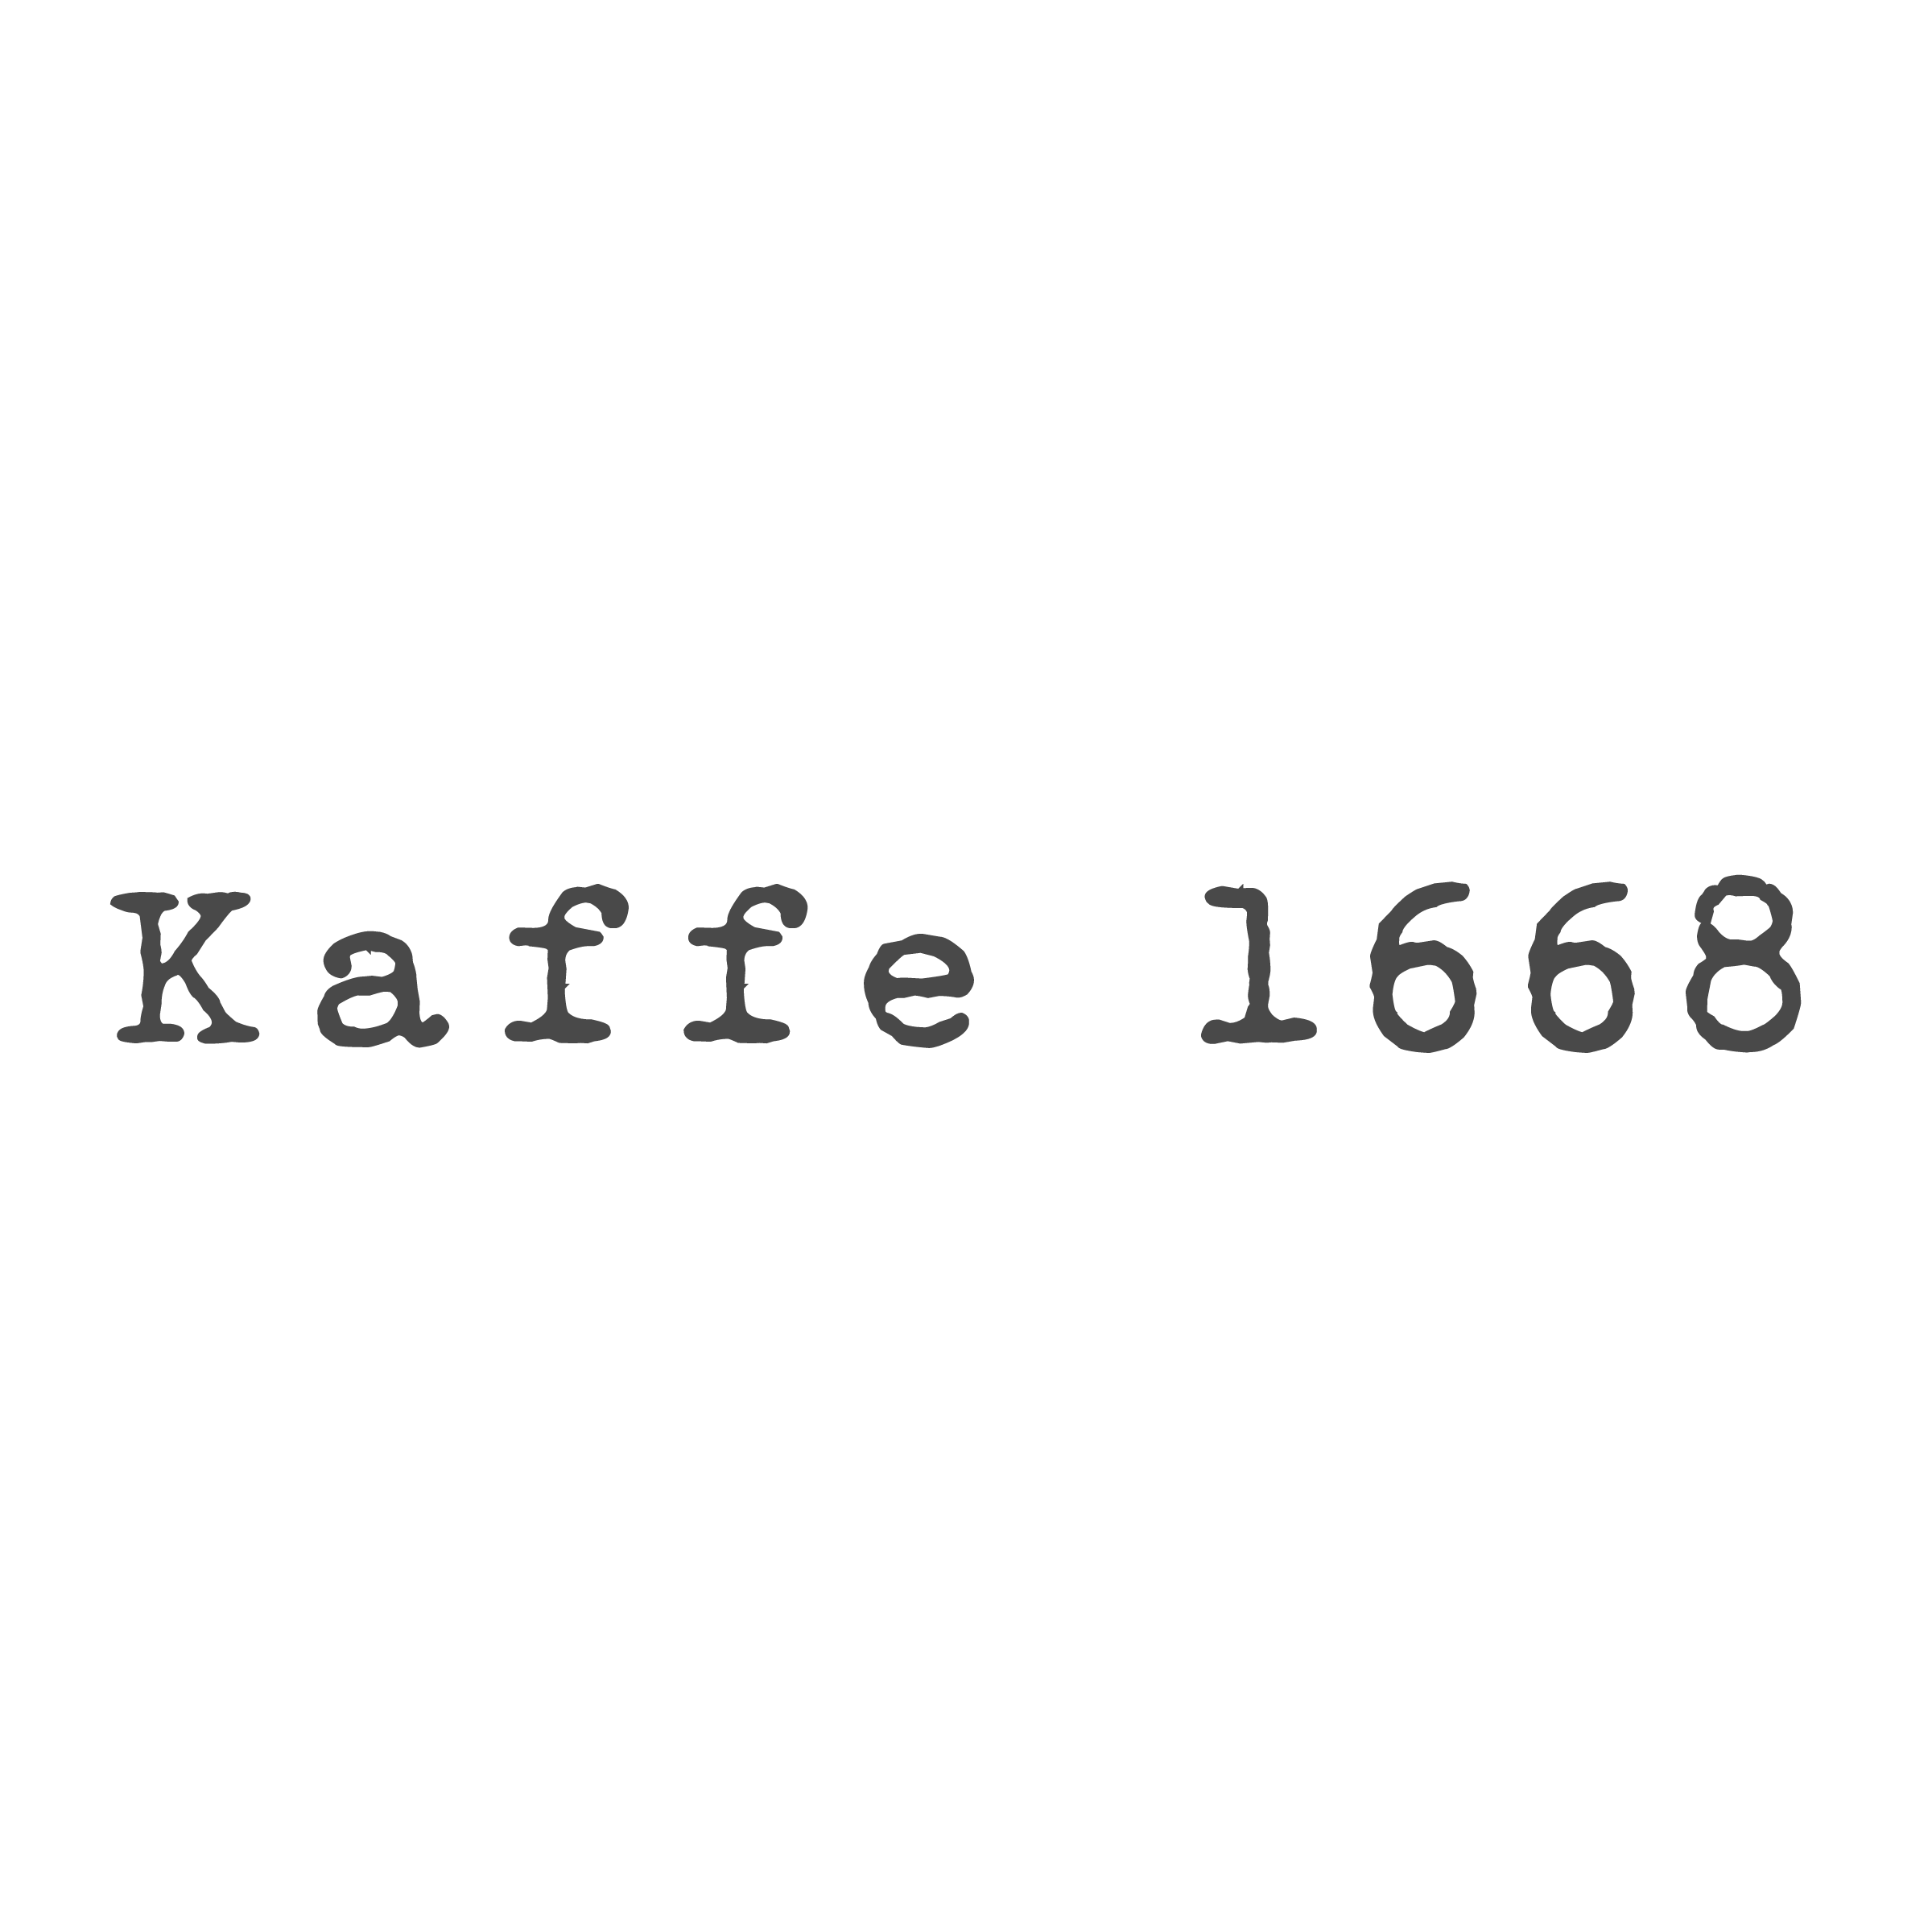 kaffee1668.png